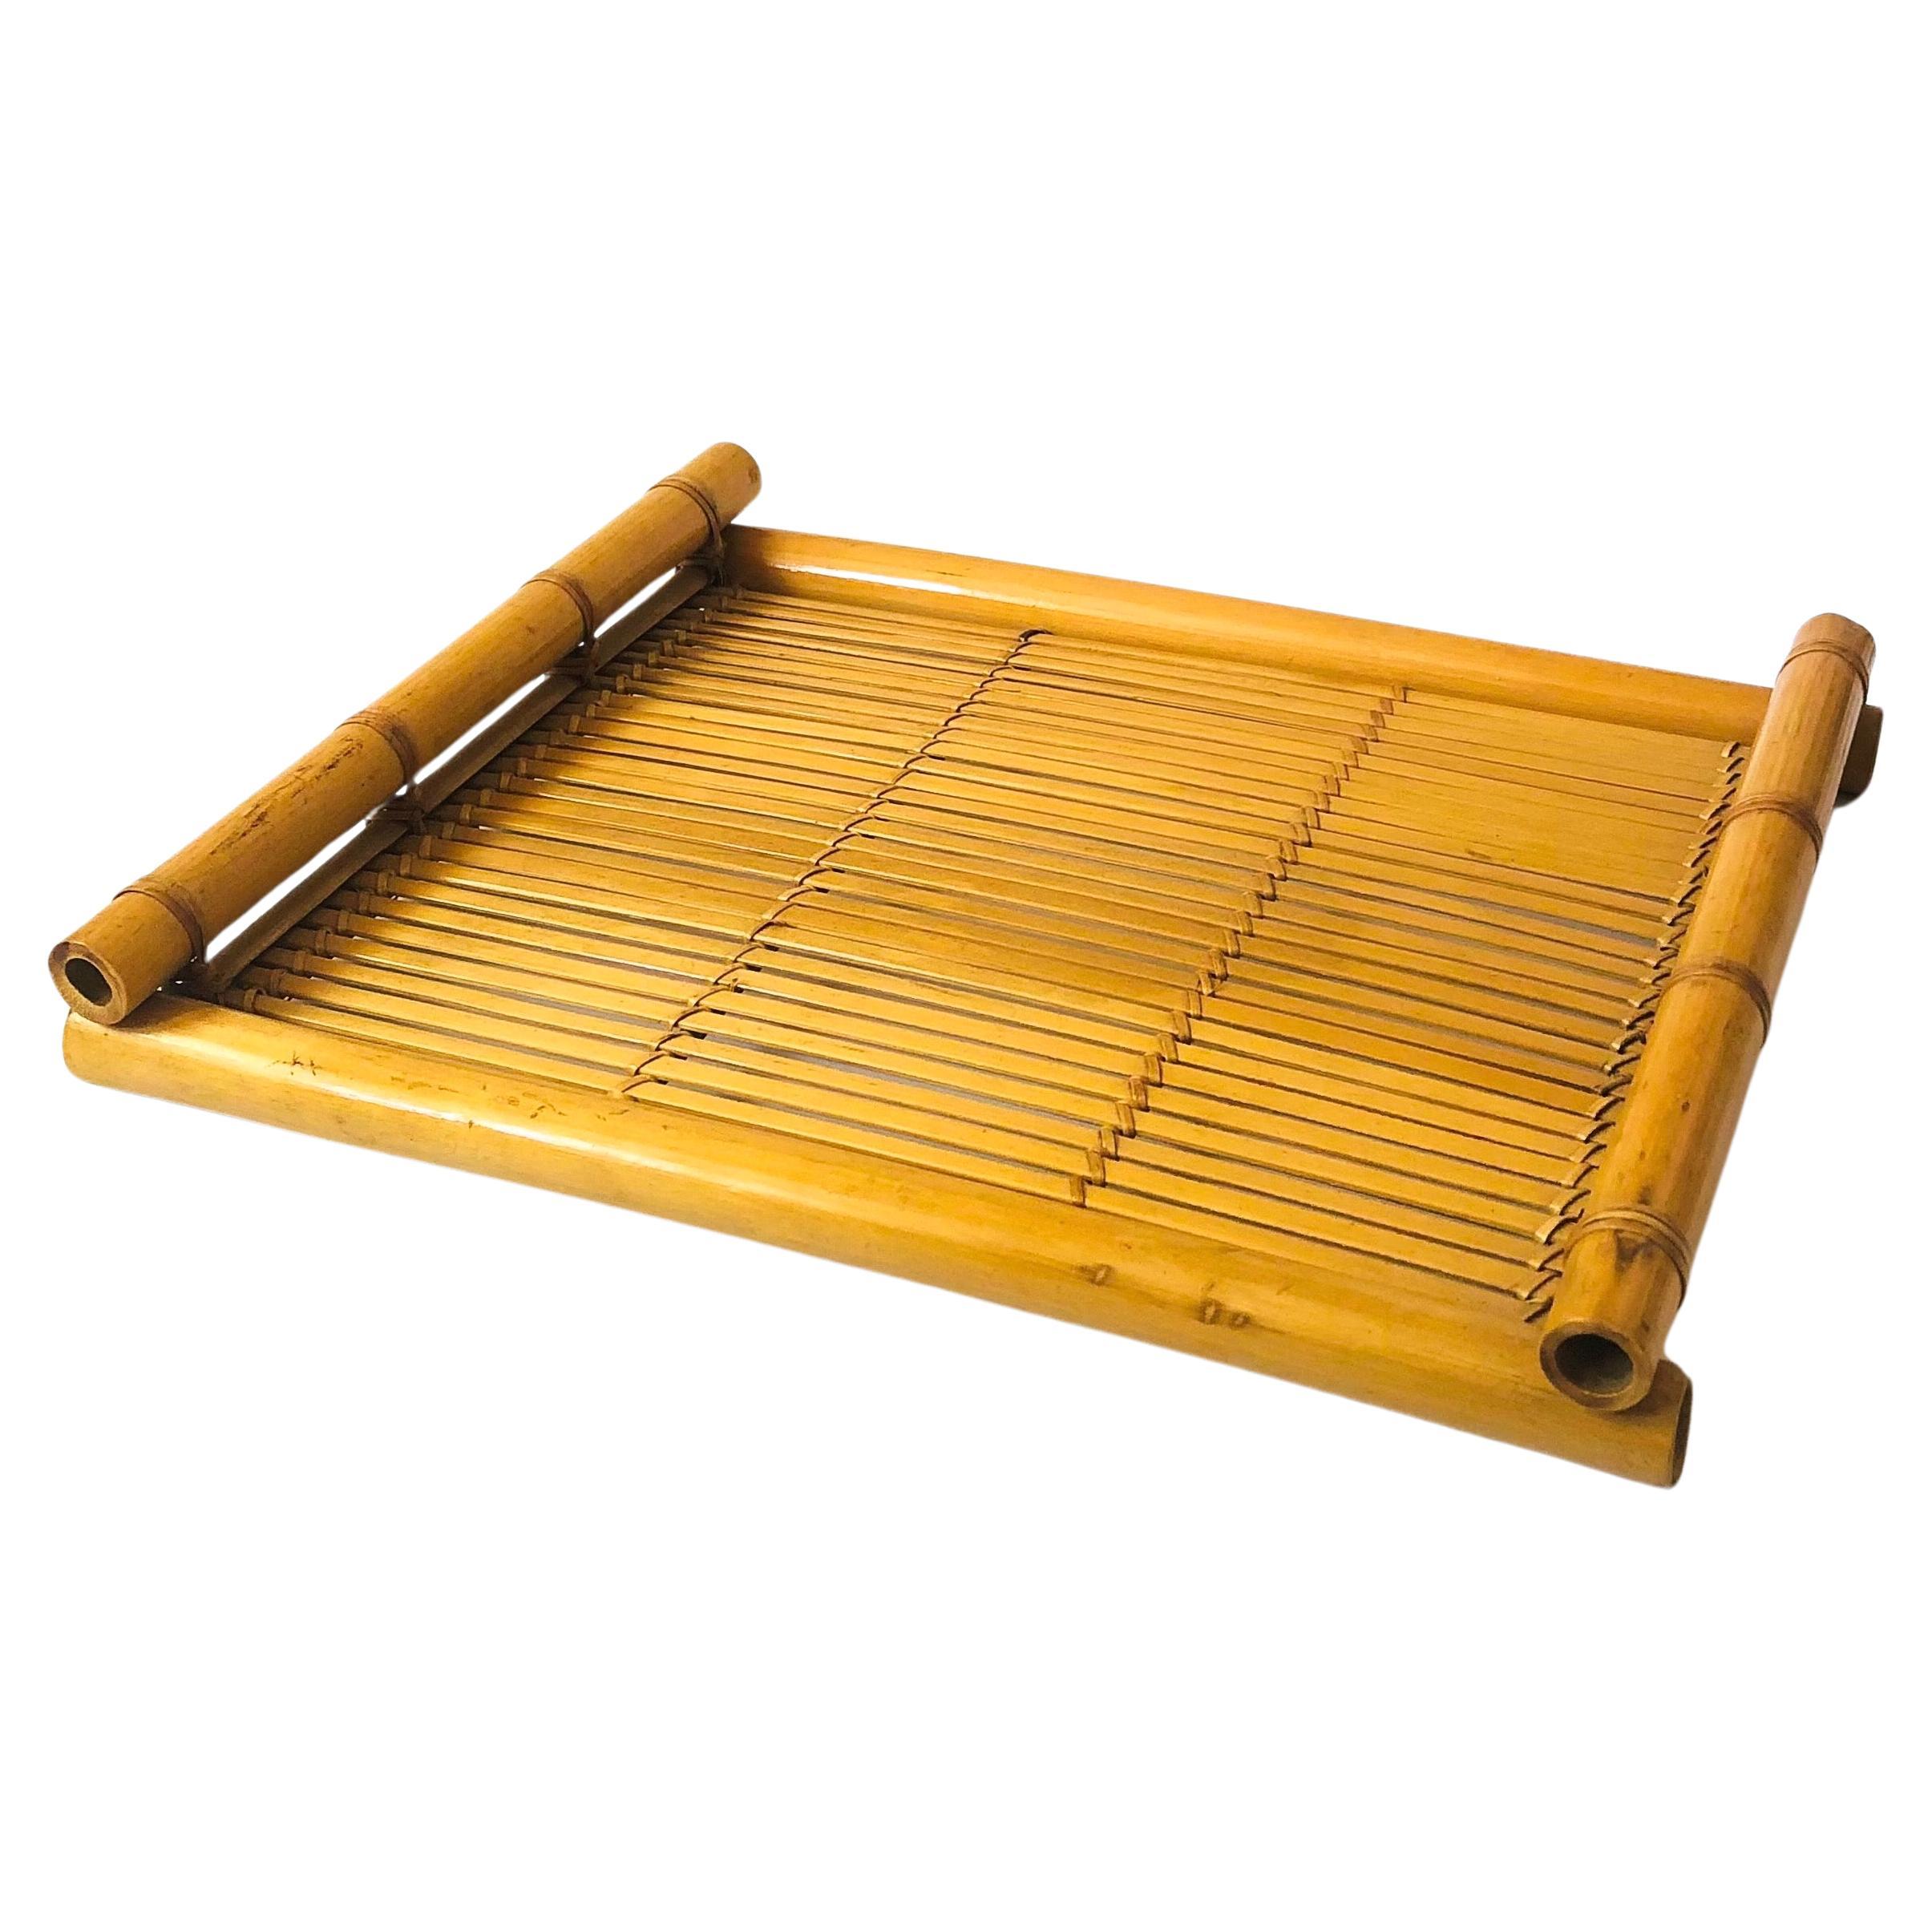 Large Bamboo Tray